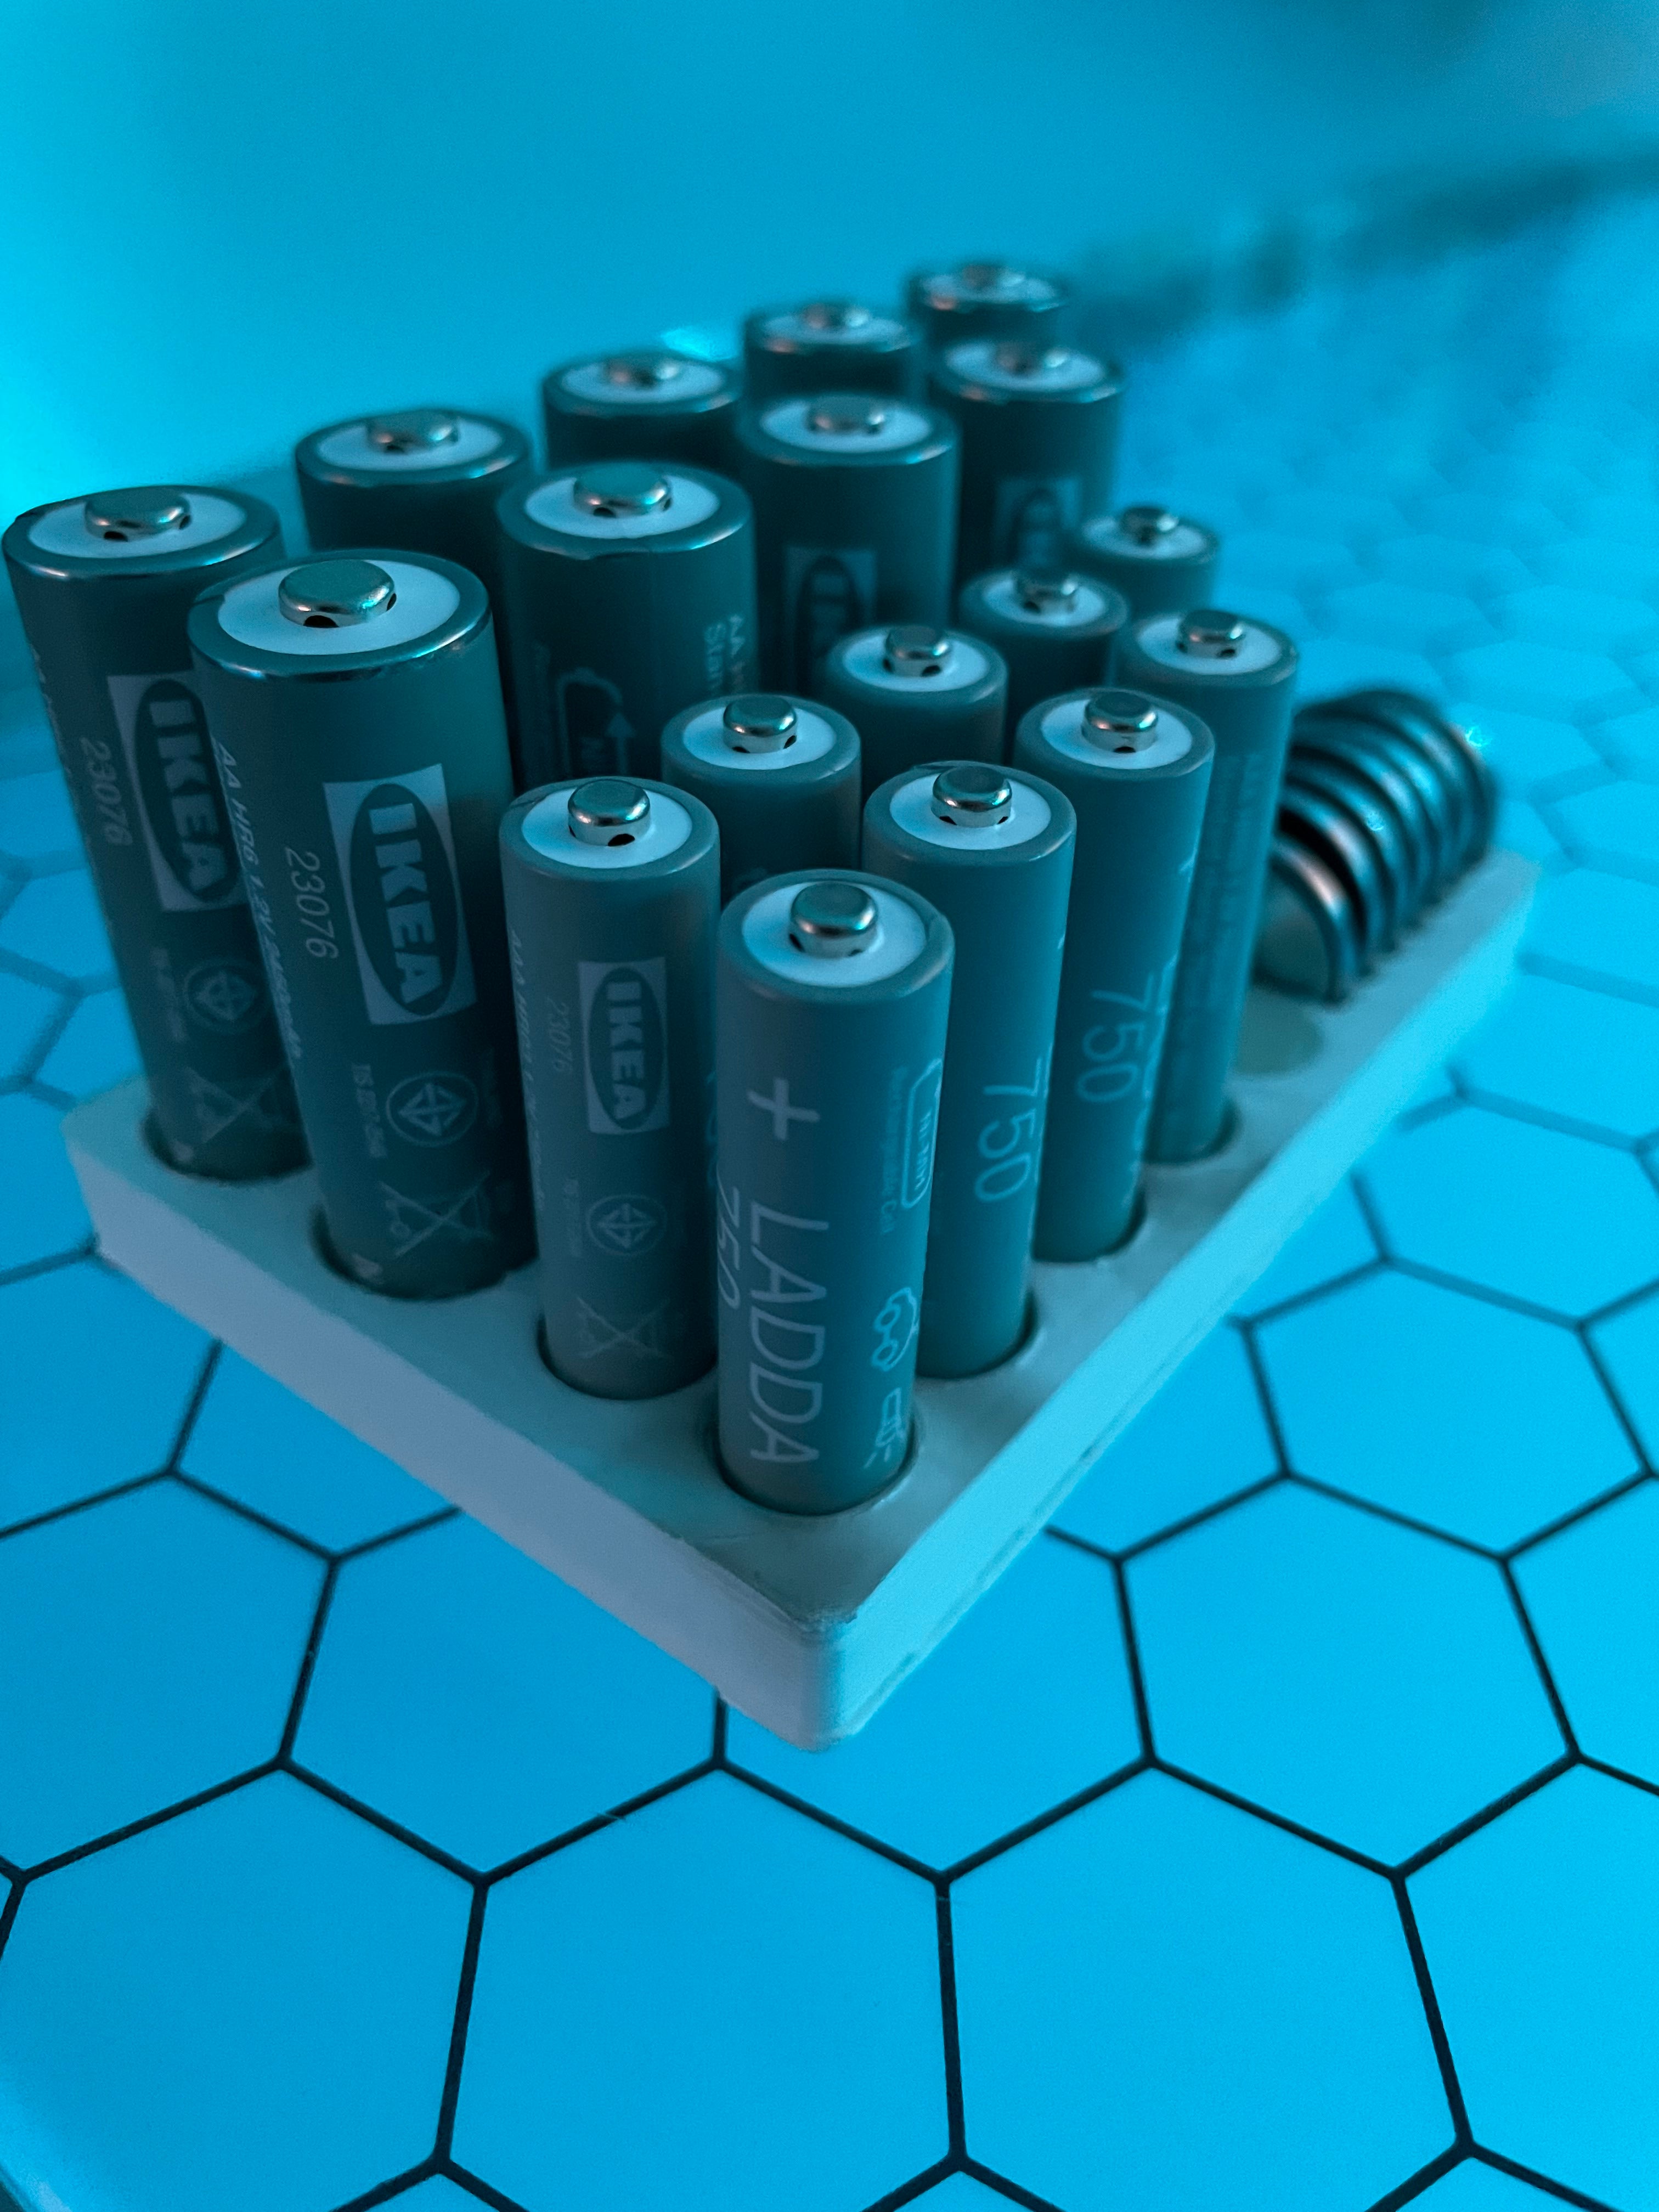 Portabatterie per batterie AA, AAA e CR2032 (adatto a IKEA Ladda)